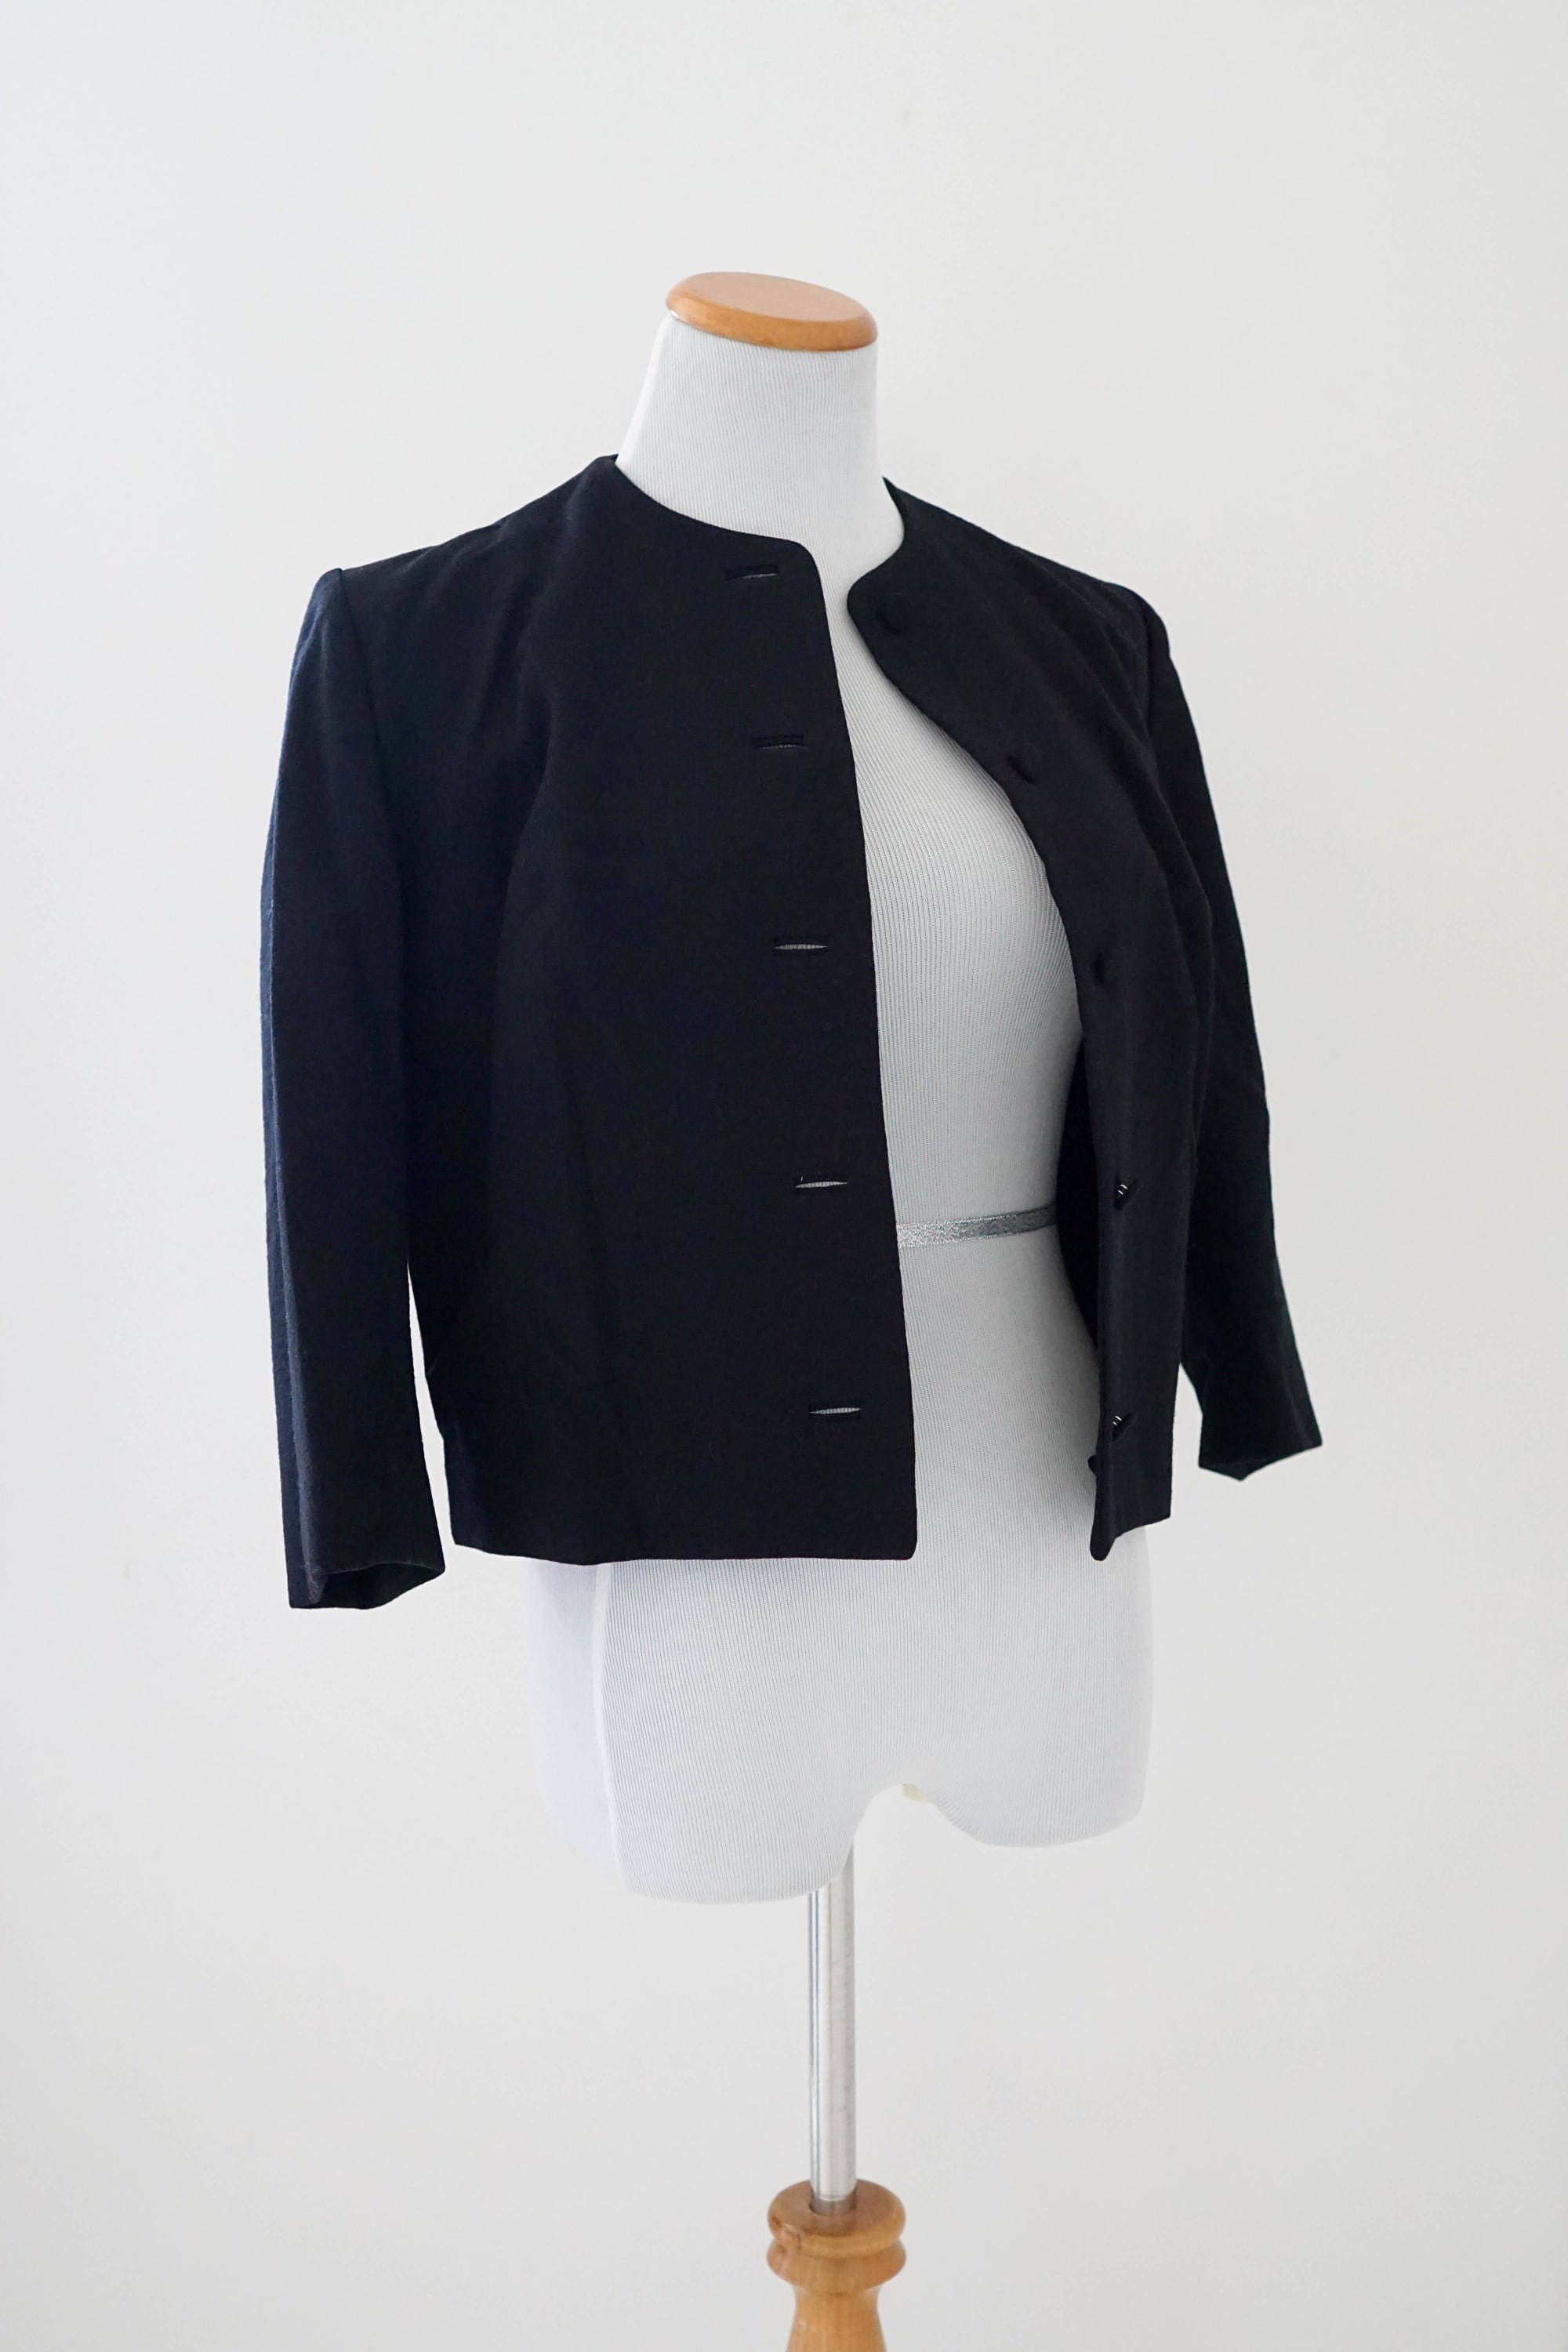 Vintage Pendleton Jacket / 80s Cropped Jacket / Vintage Black | Etsy